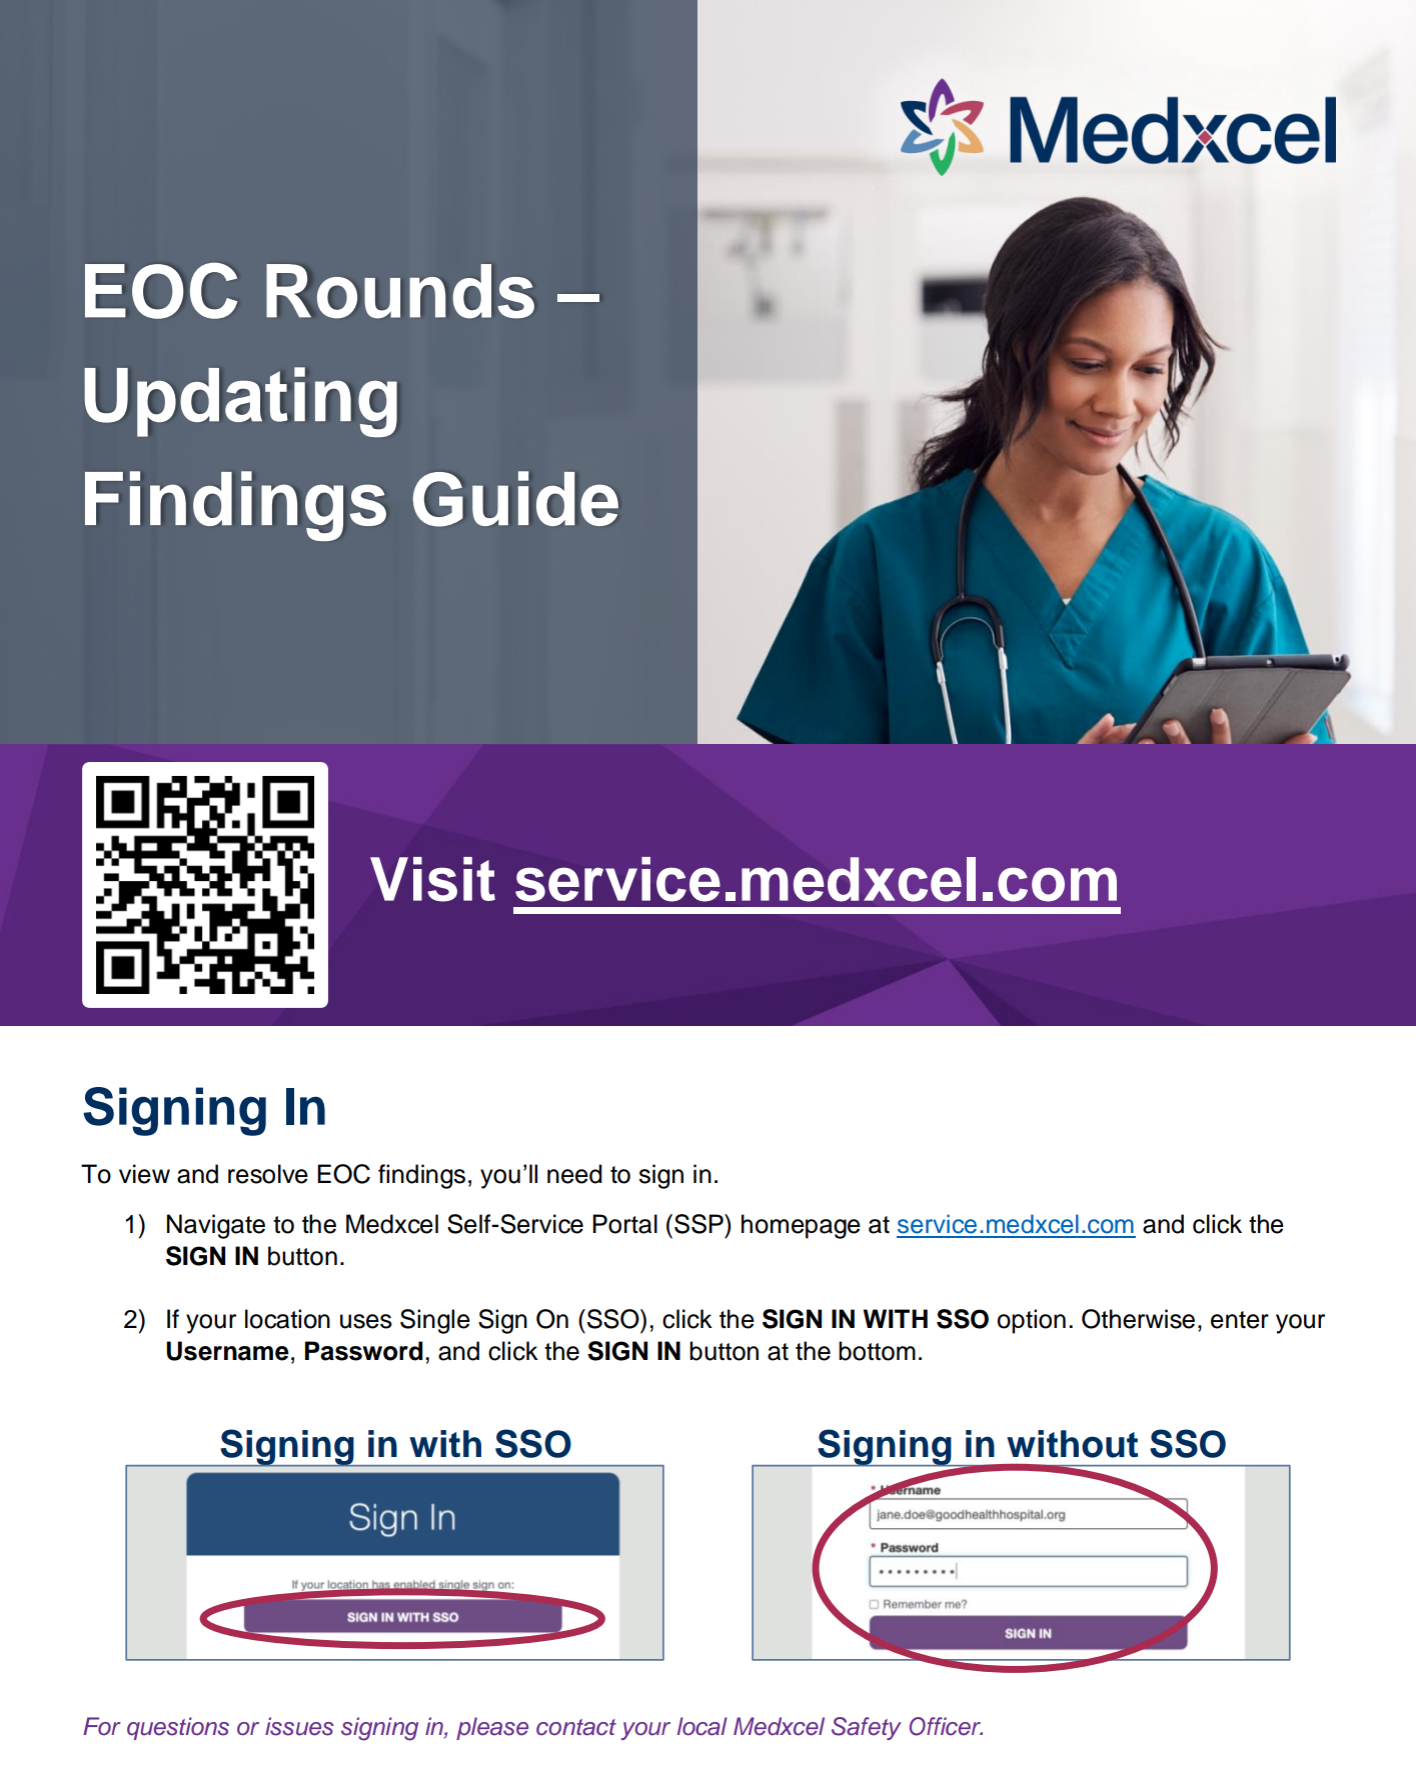 EOC Roundings Guide